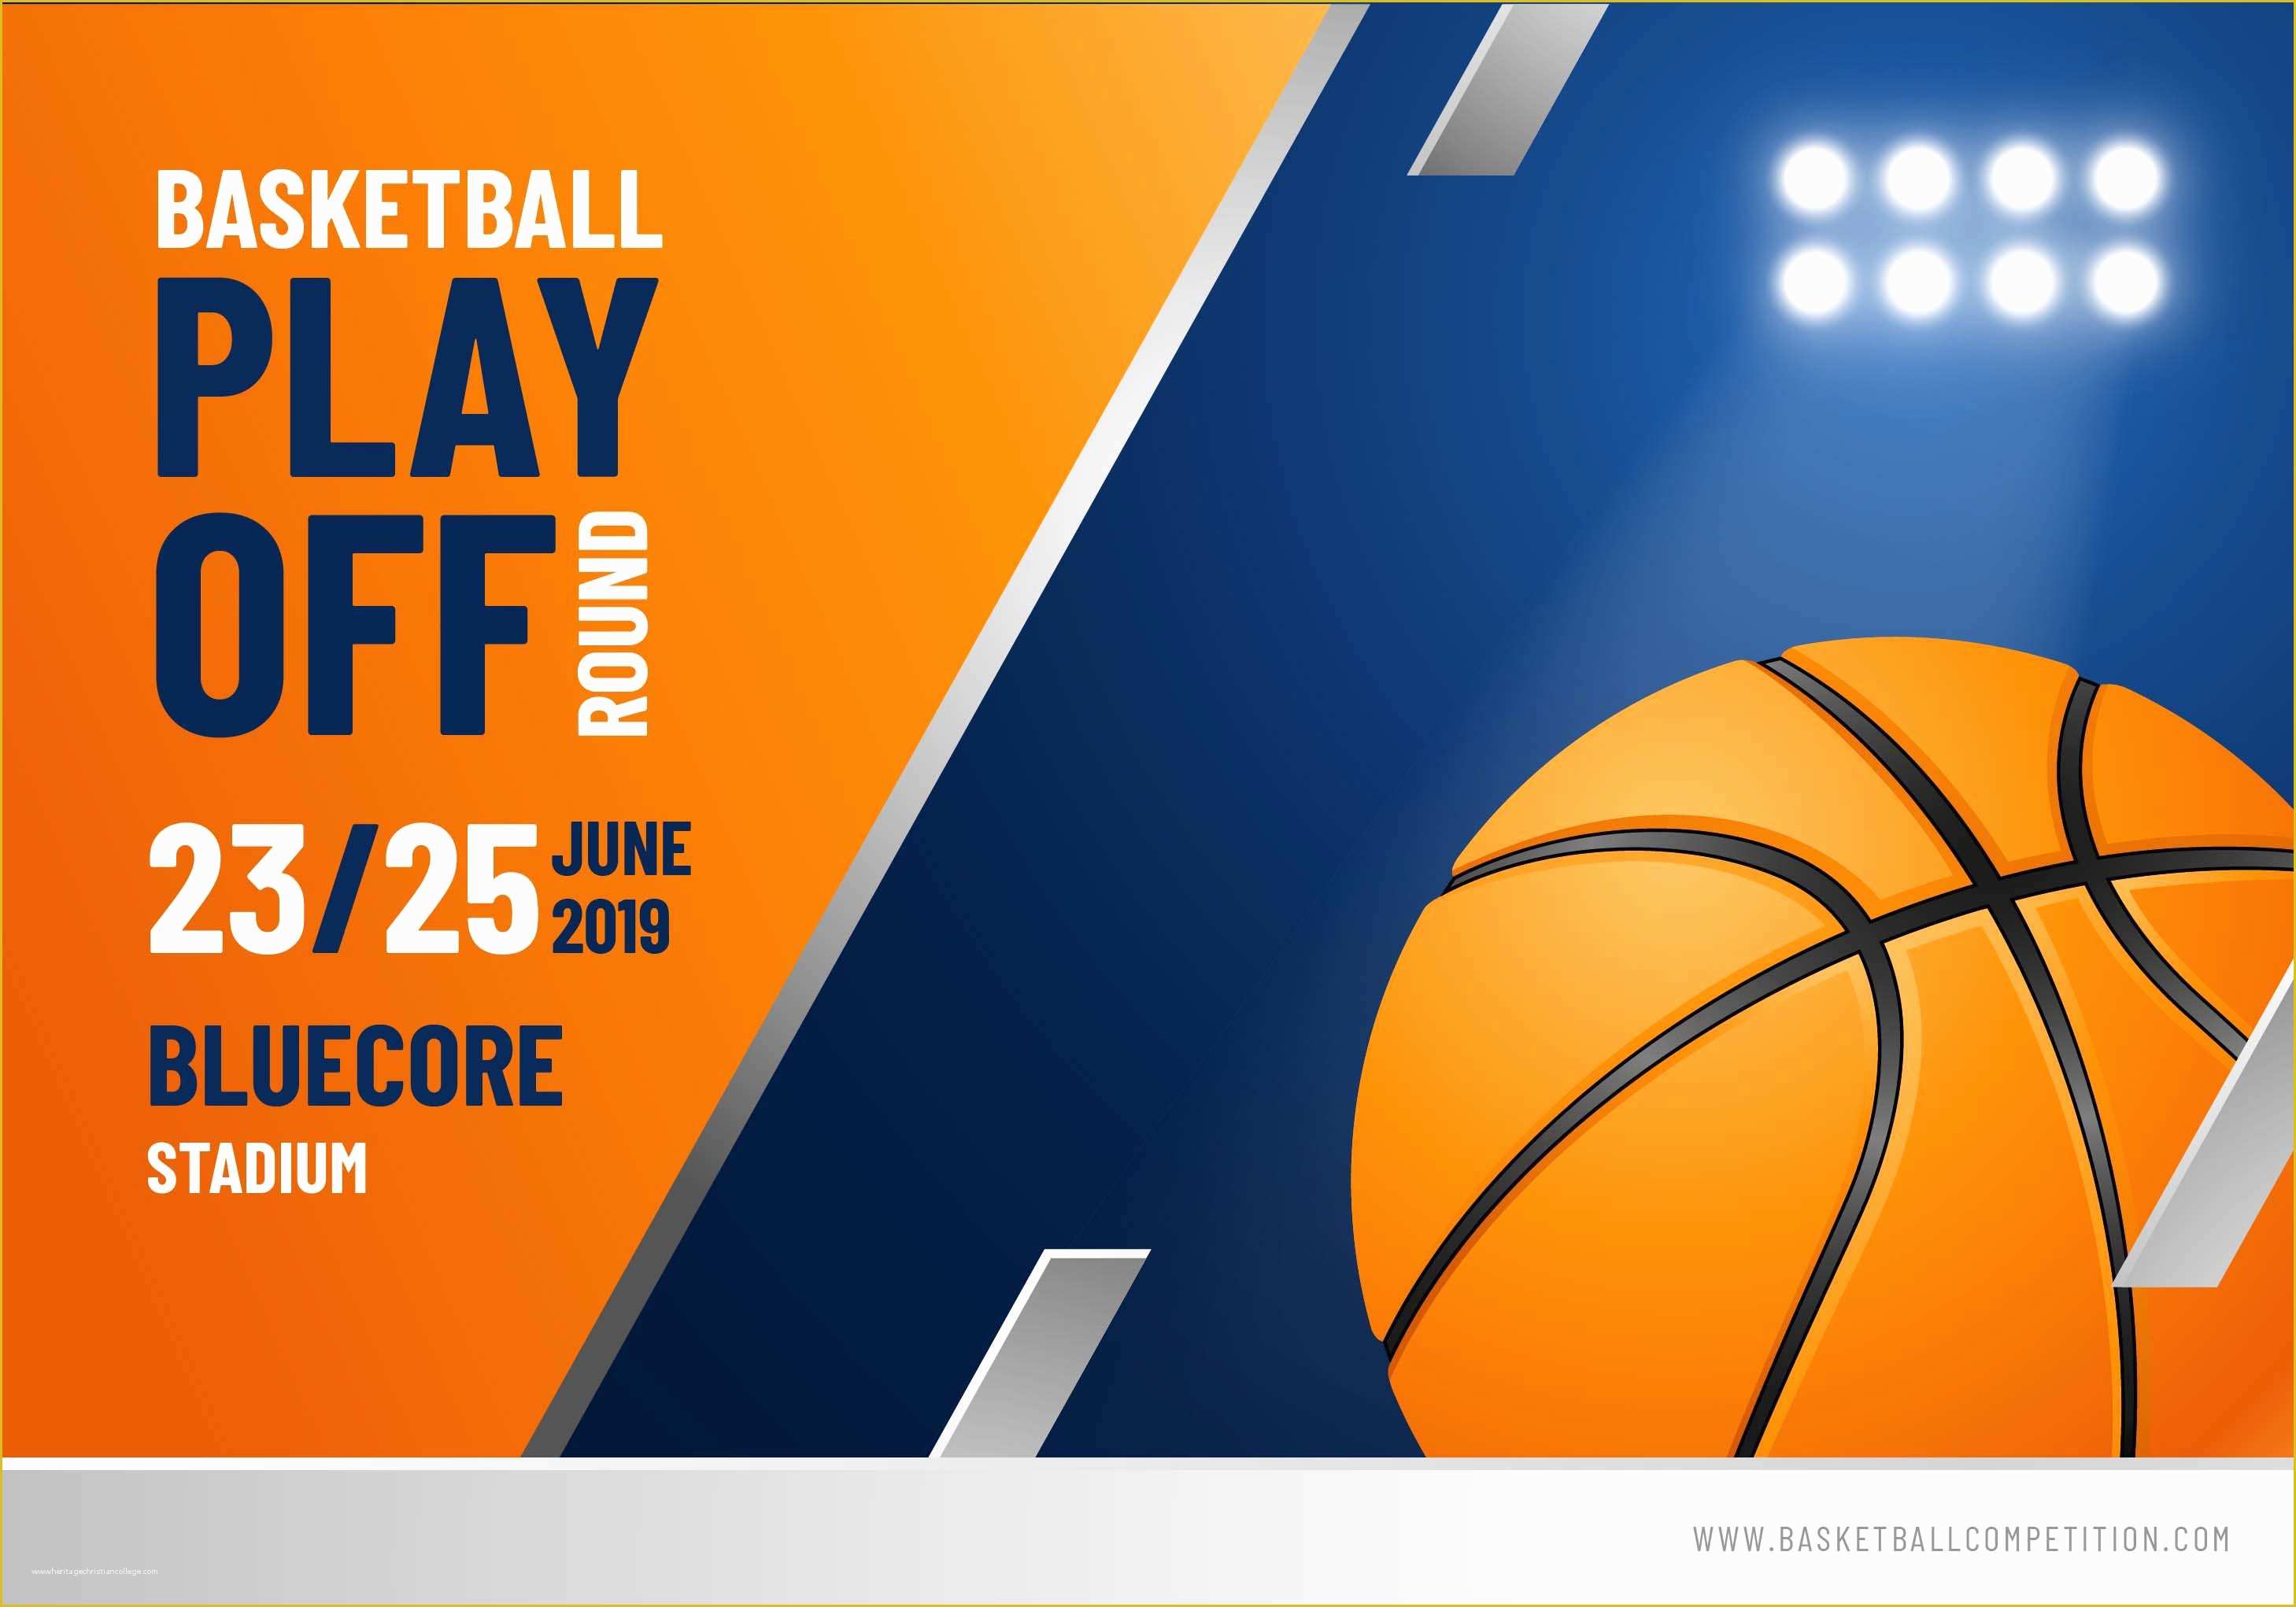 Free Basketball Website Templates Of Basketball Banner Free Vector Art Free Downloads